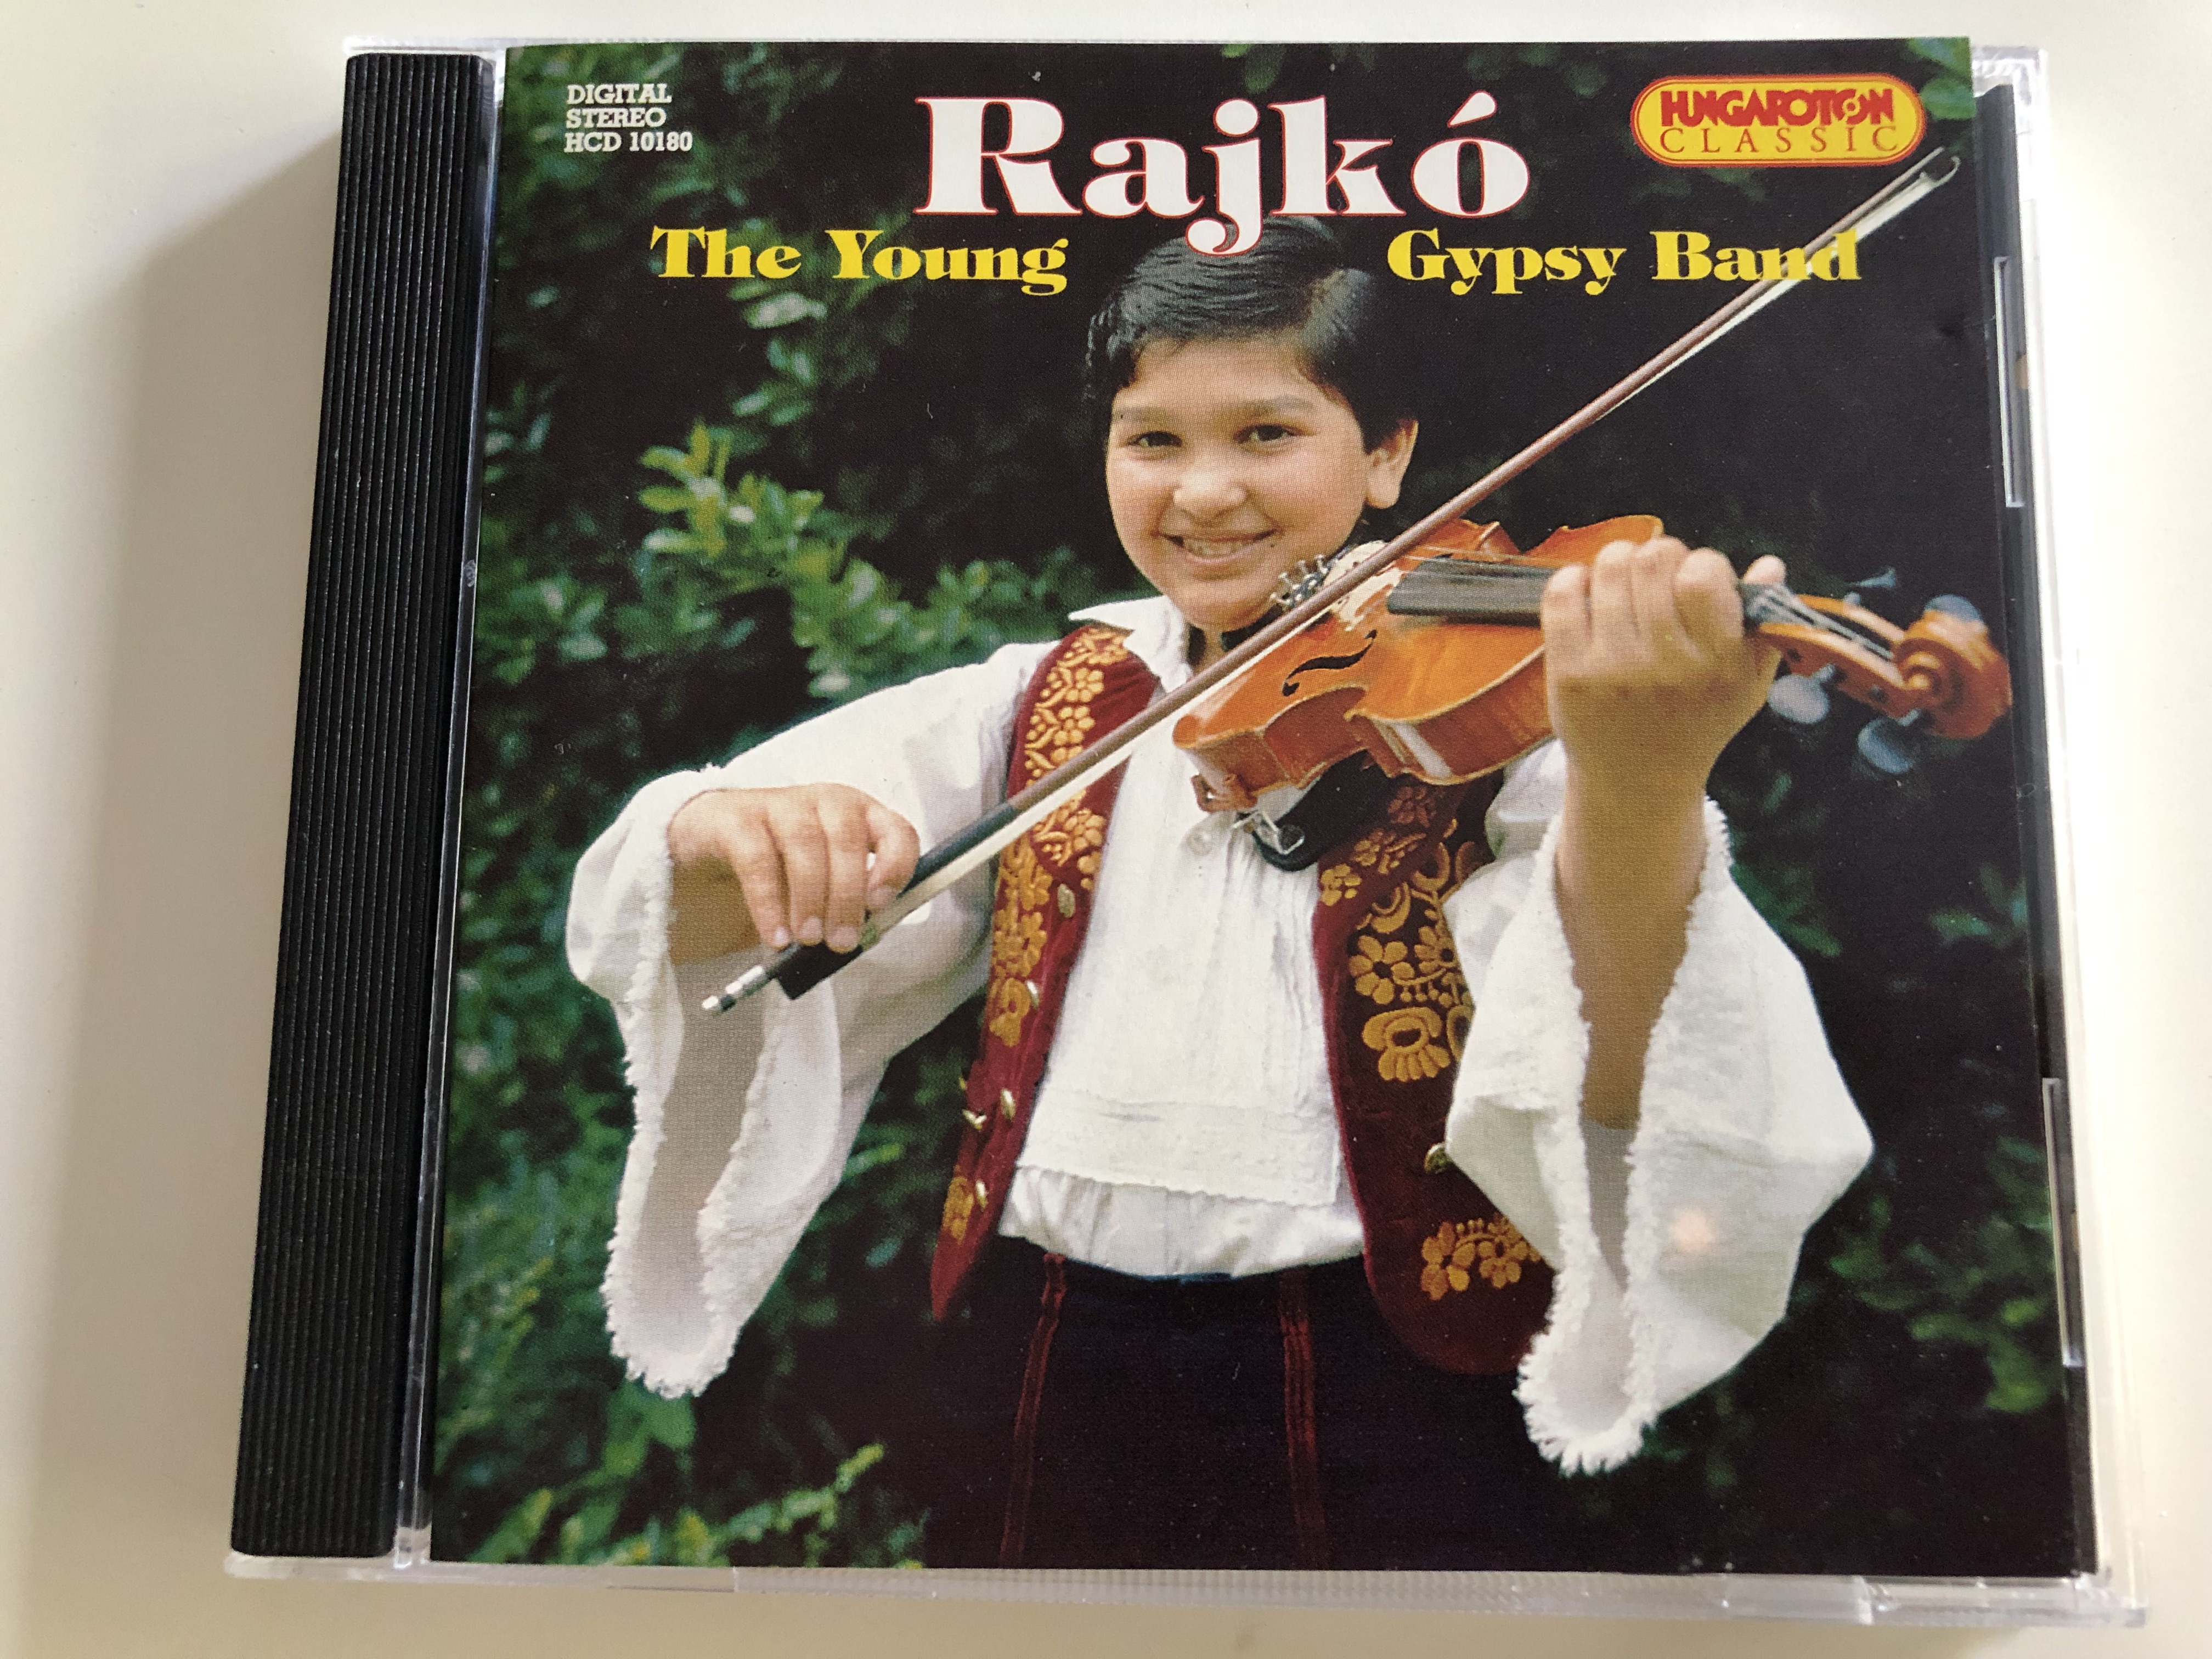 the-young-rajk-gypsy-band-art-leader-farkas-gyula-hungaroton-classic-audio-cd-1996-hcd-10180-1-.jpg